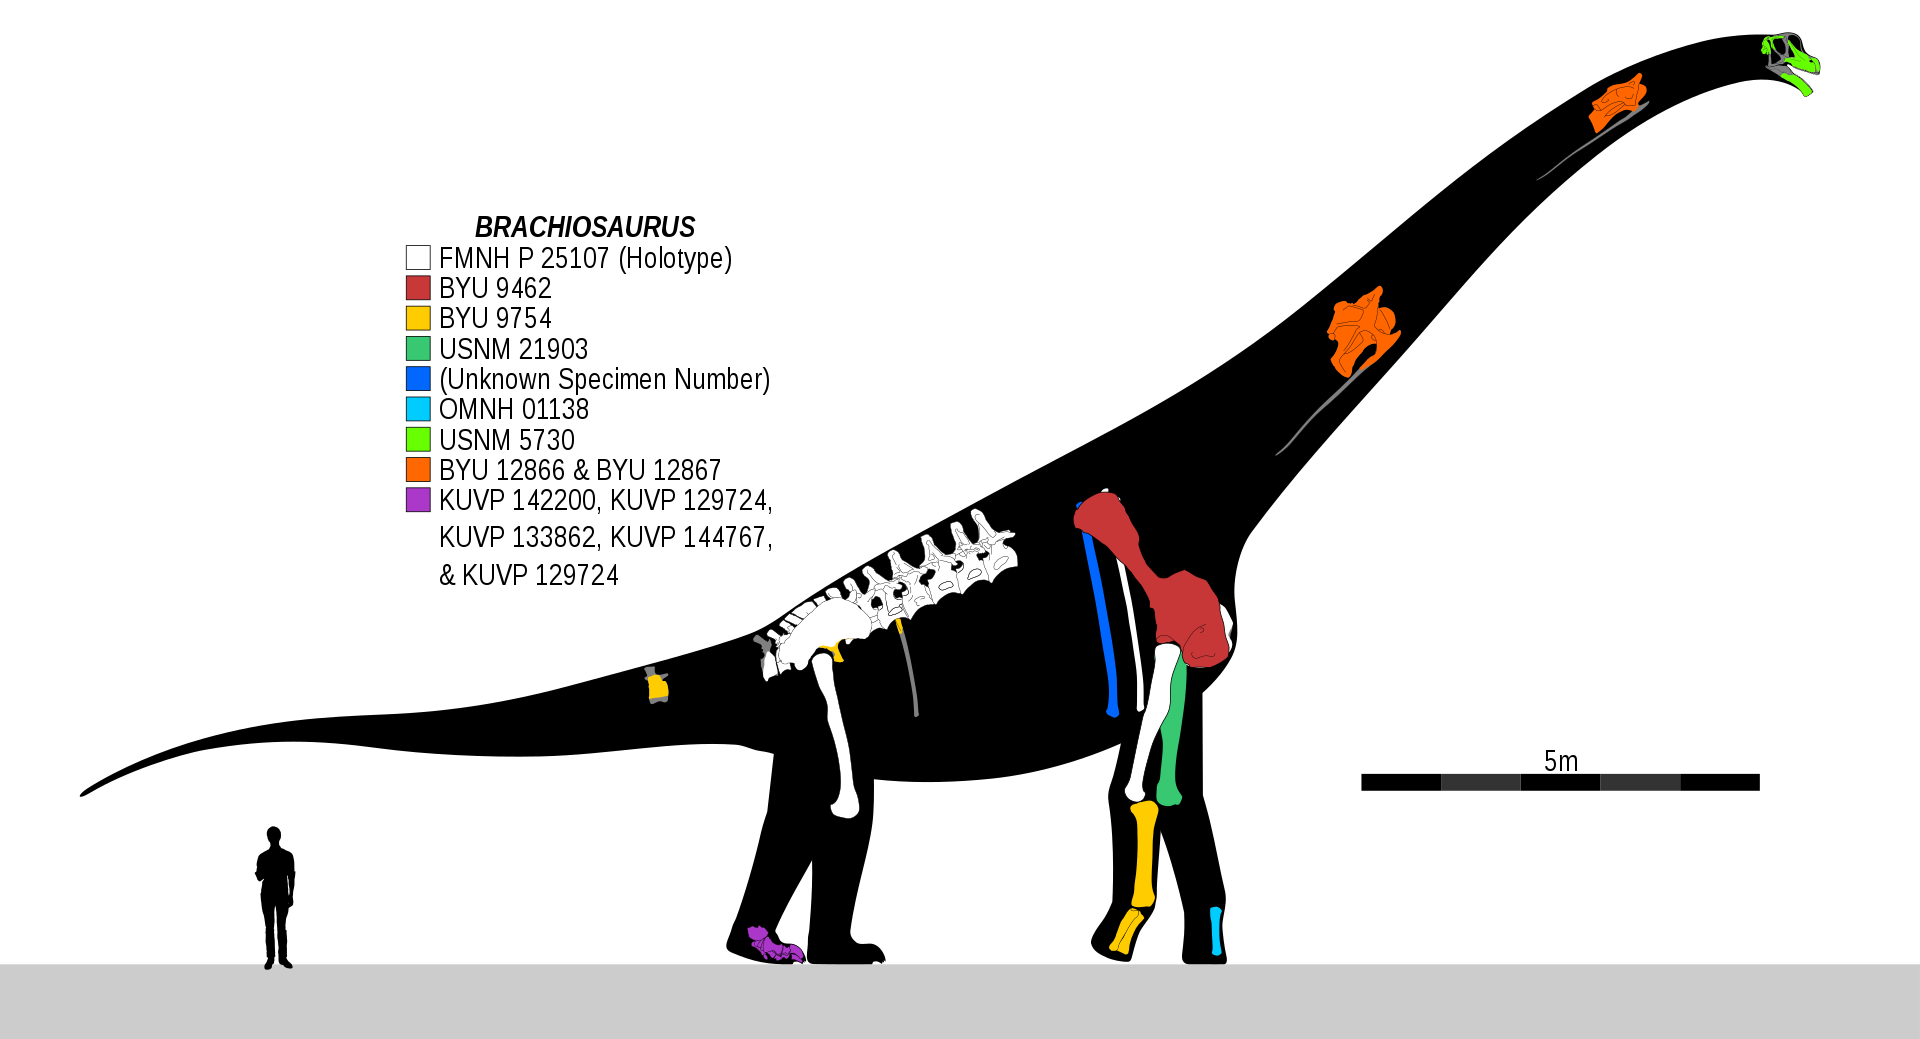 Brachiosaurus holotype